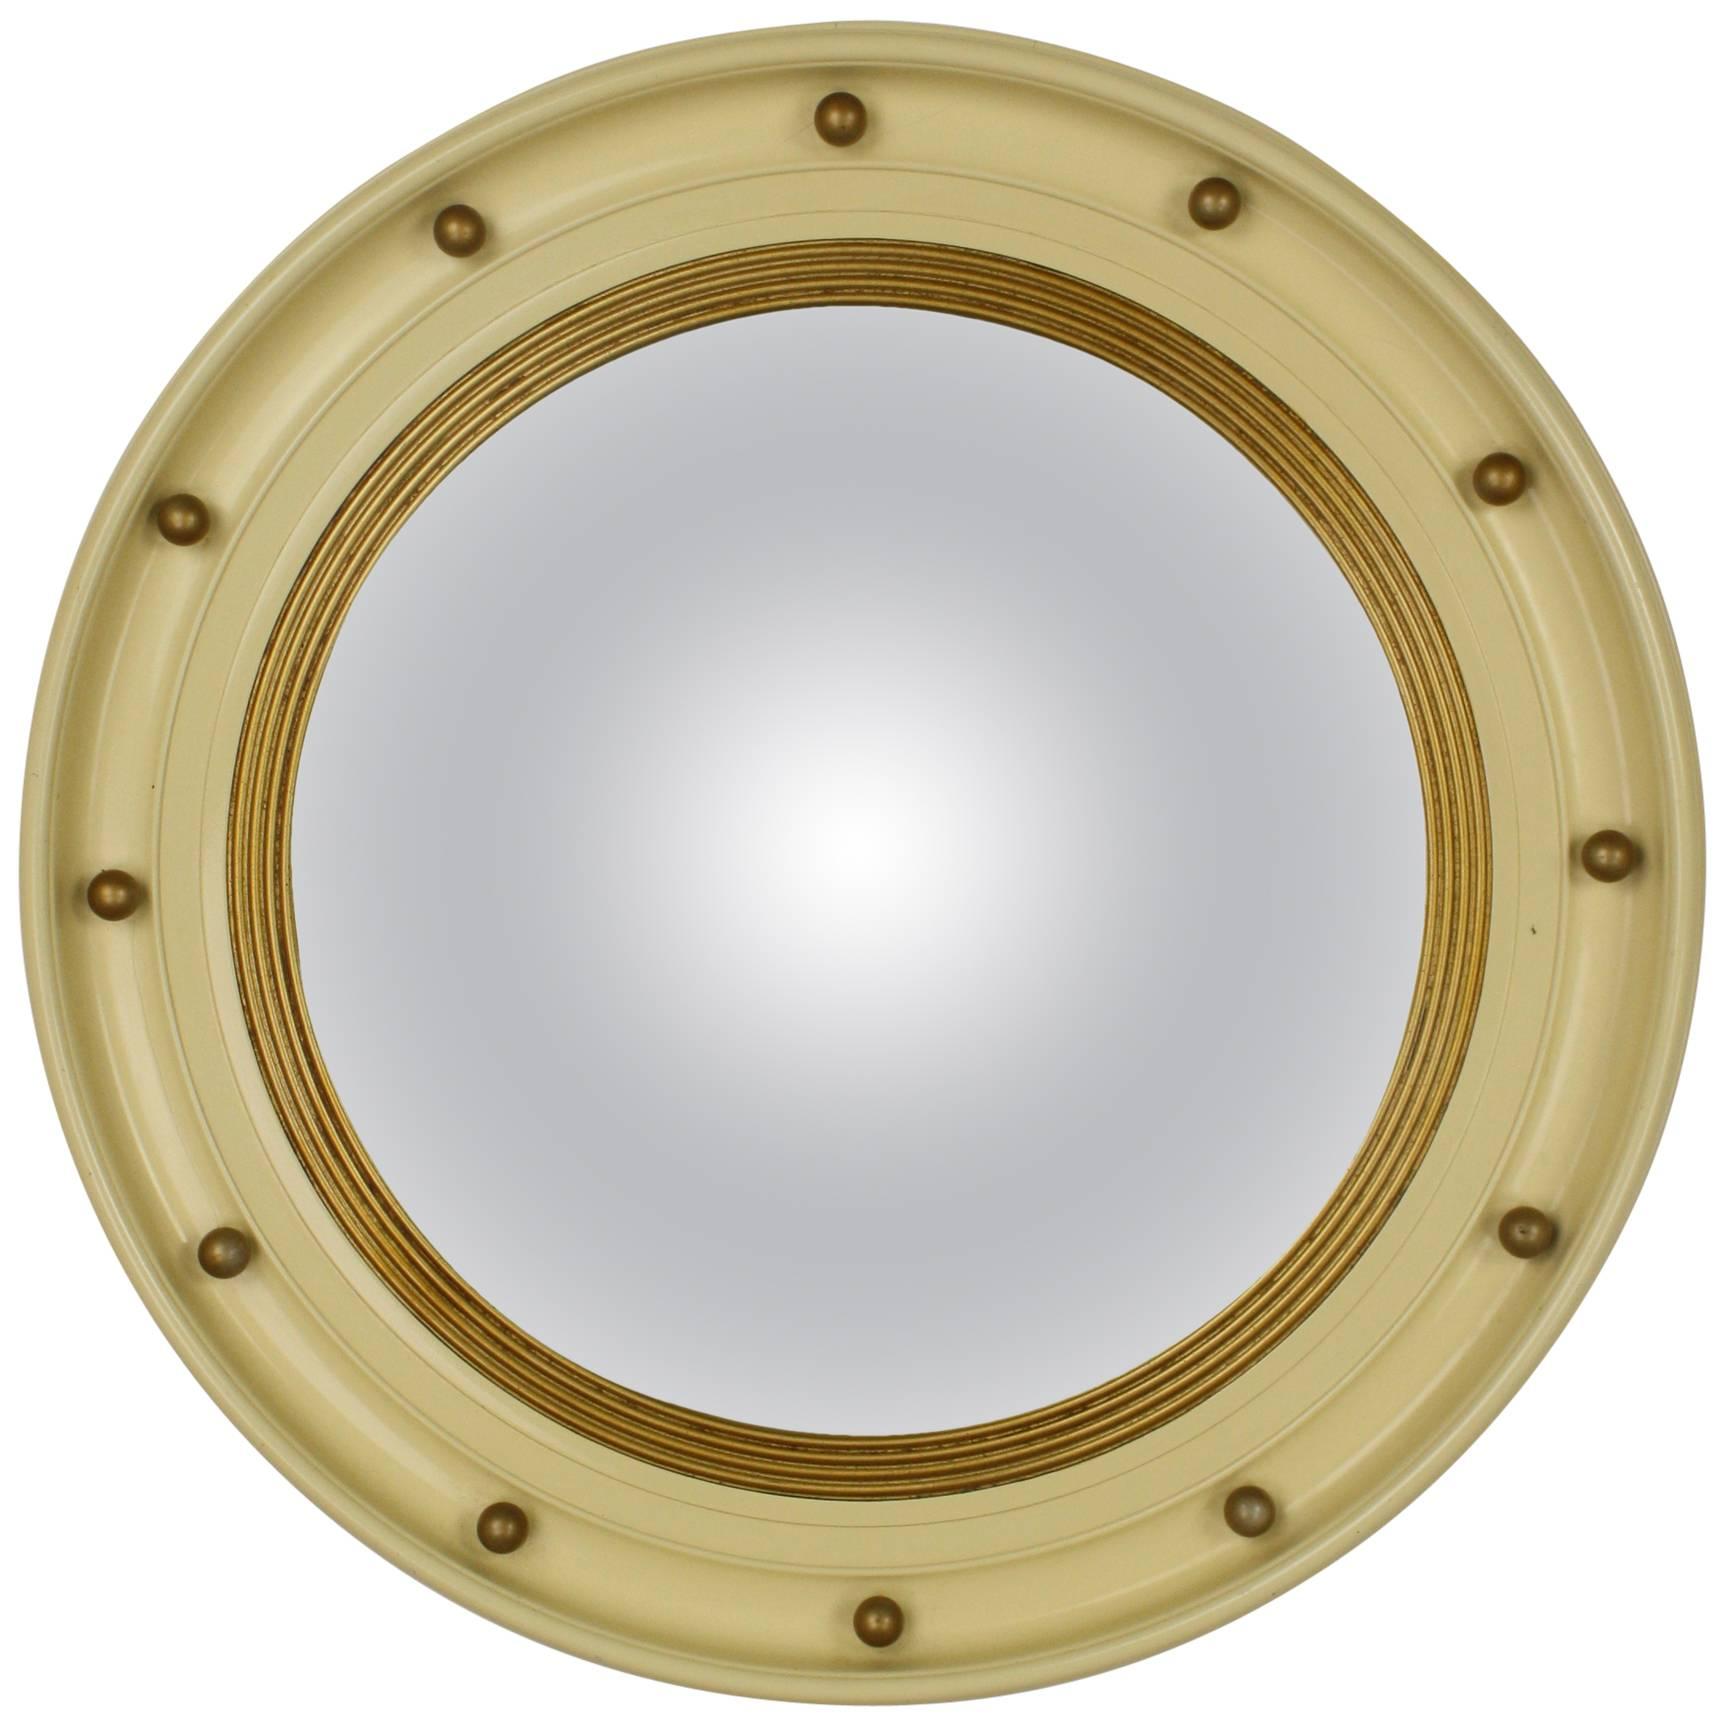 Cream and Gold Regency Style Bulls Eye Convex Mirror